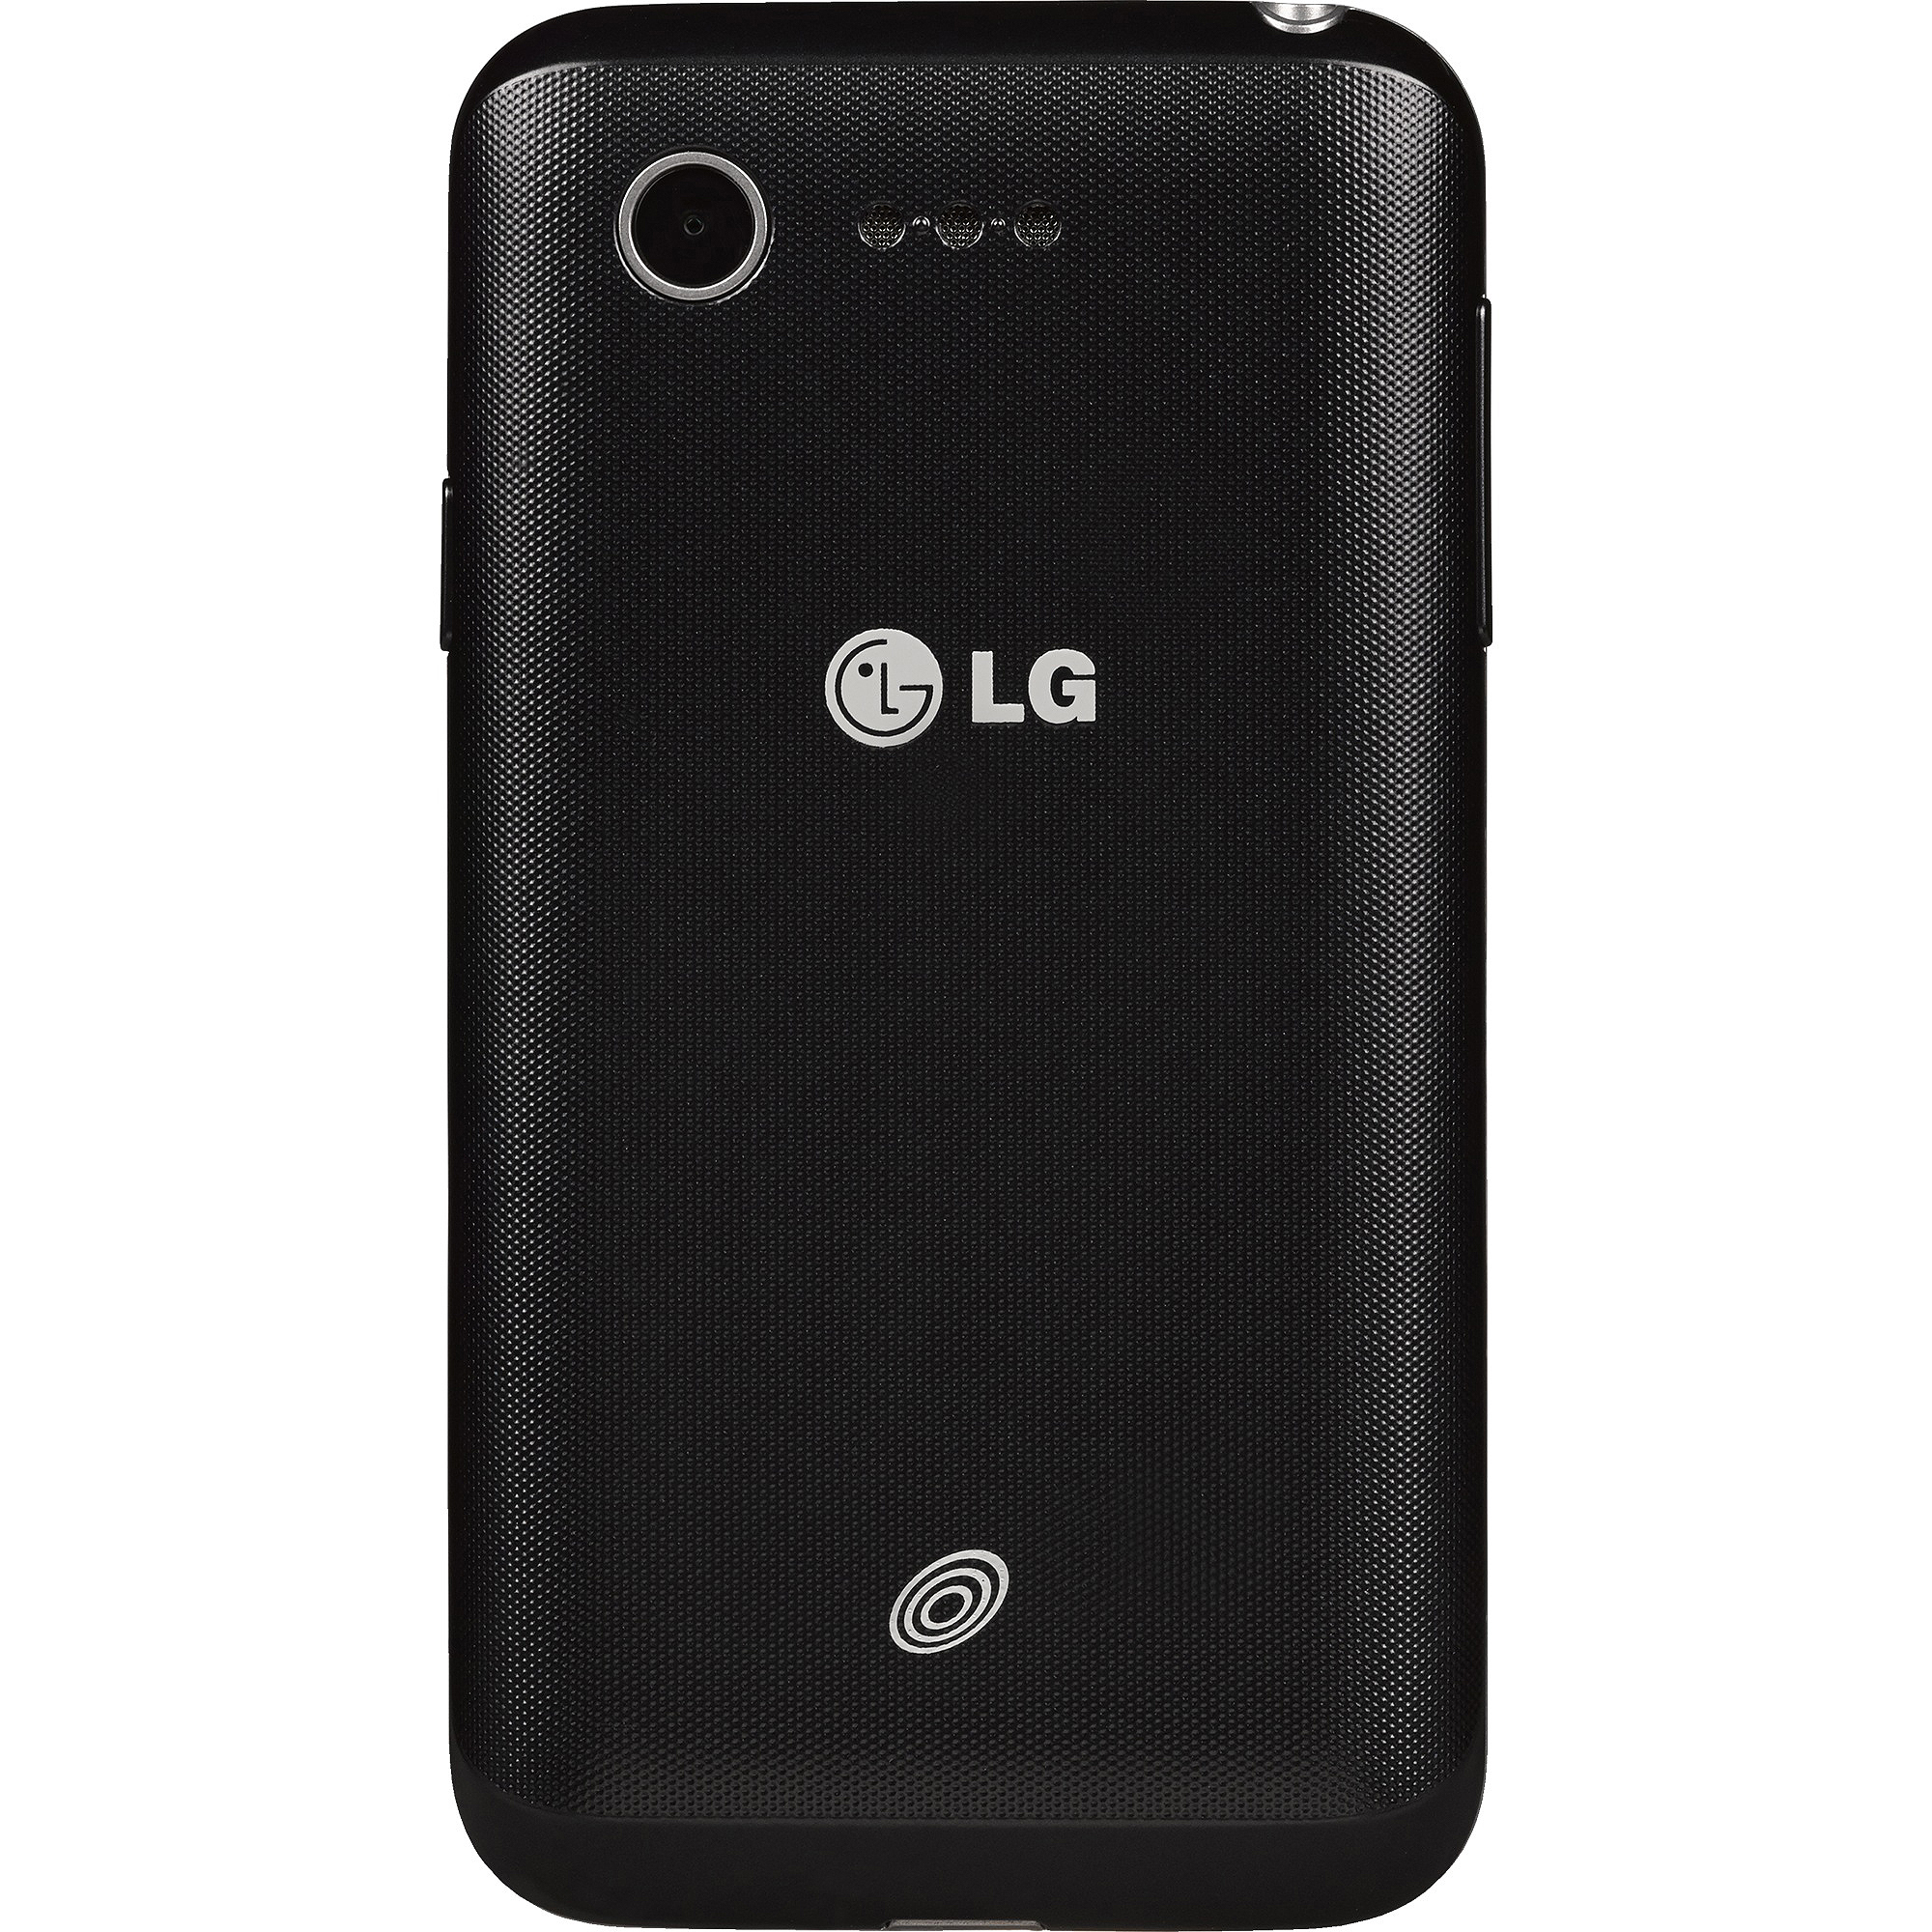 Net10 LG Optimus Fuel Android Prepaid Smartphone - image 3 of 4